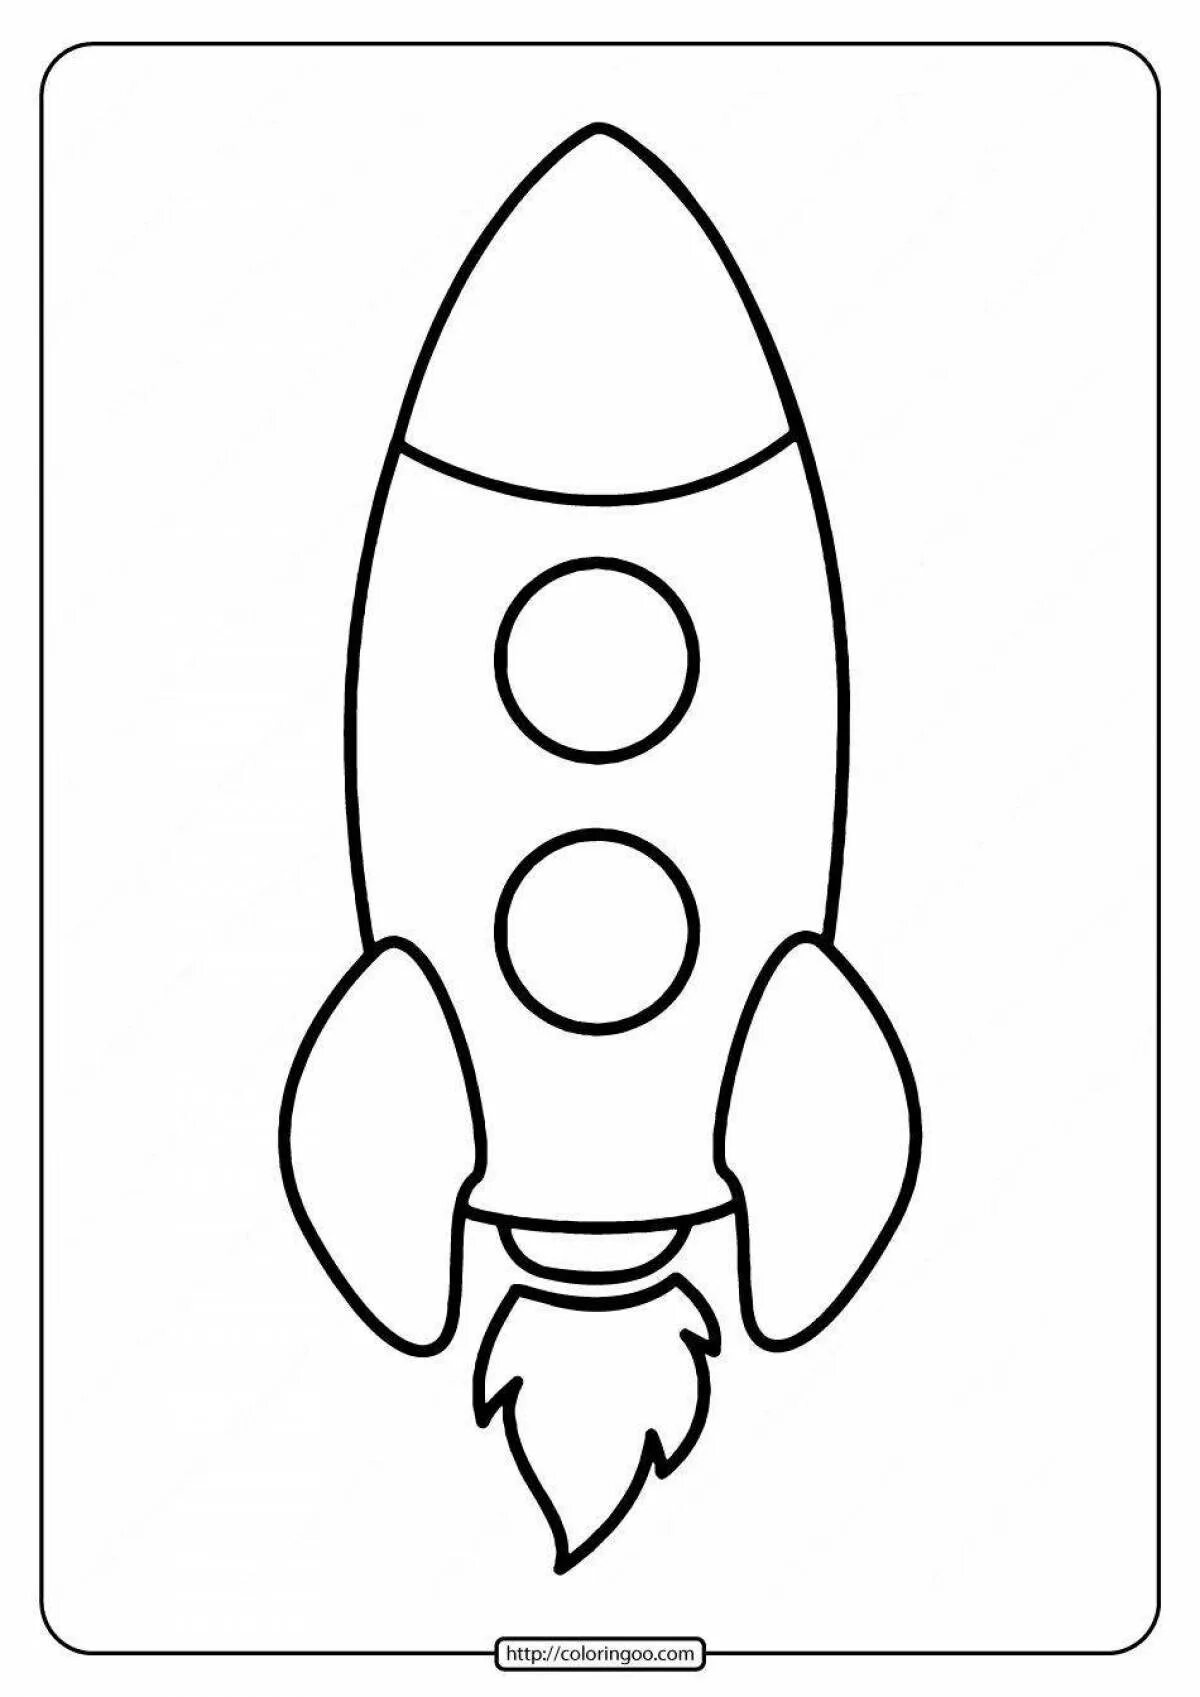 Ракета раскраска. Раскраска ракета в космосе для детей. Ракета трафарет для детей. Ракета раскраска для малышей